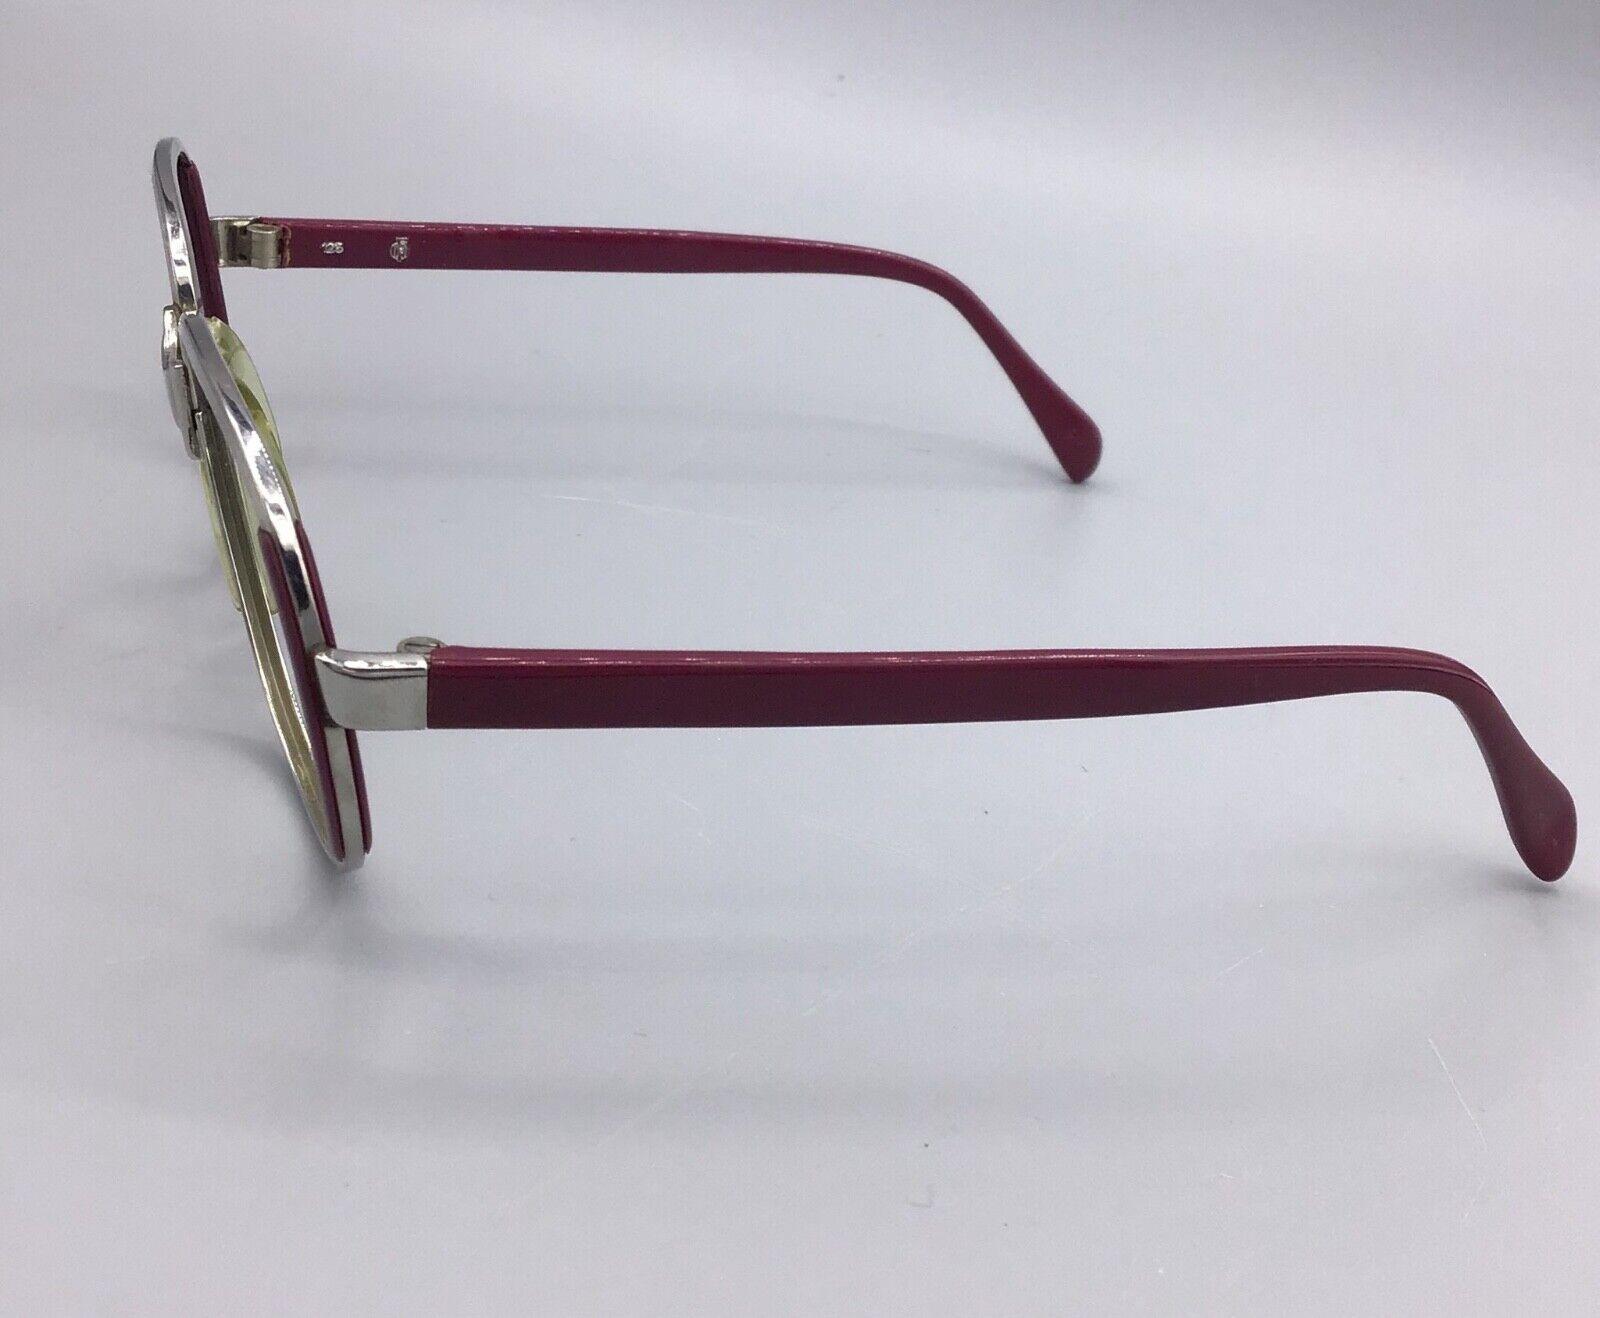 Metzler occhiale vintage Eyewear frame brillen lunettes Germany model 510